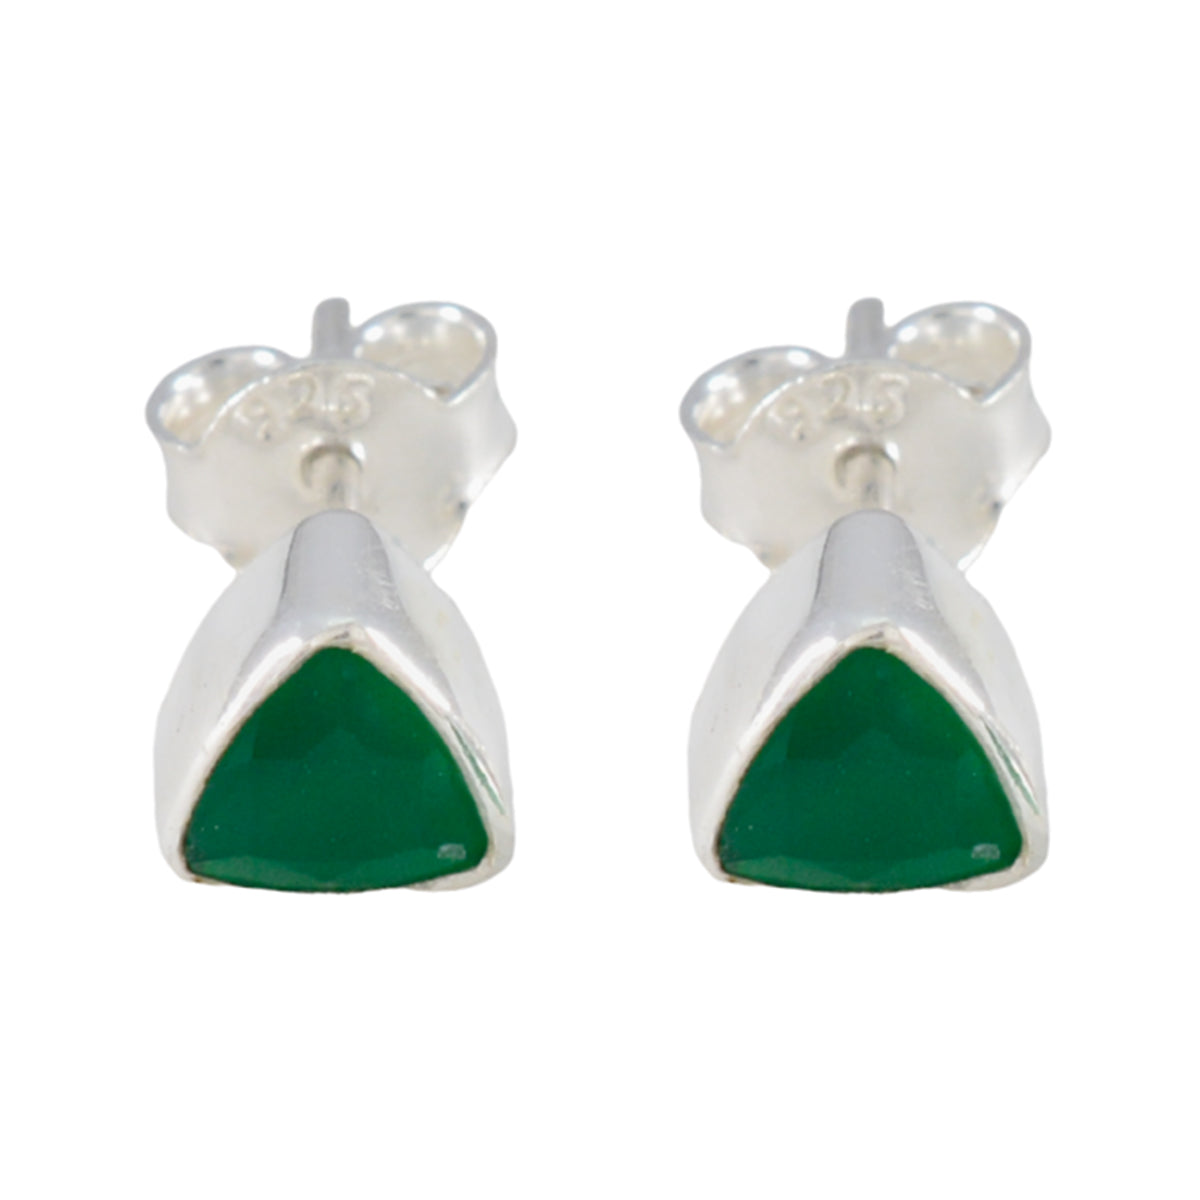 Riyo Arresting Sterling Silber Ohrring für Damen, grüner Onyx-Ohrring, Lünettenfassung, grüner Ohrring-Bolzen-Ohrring